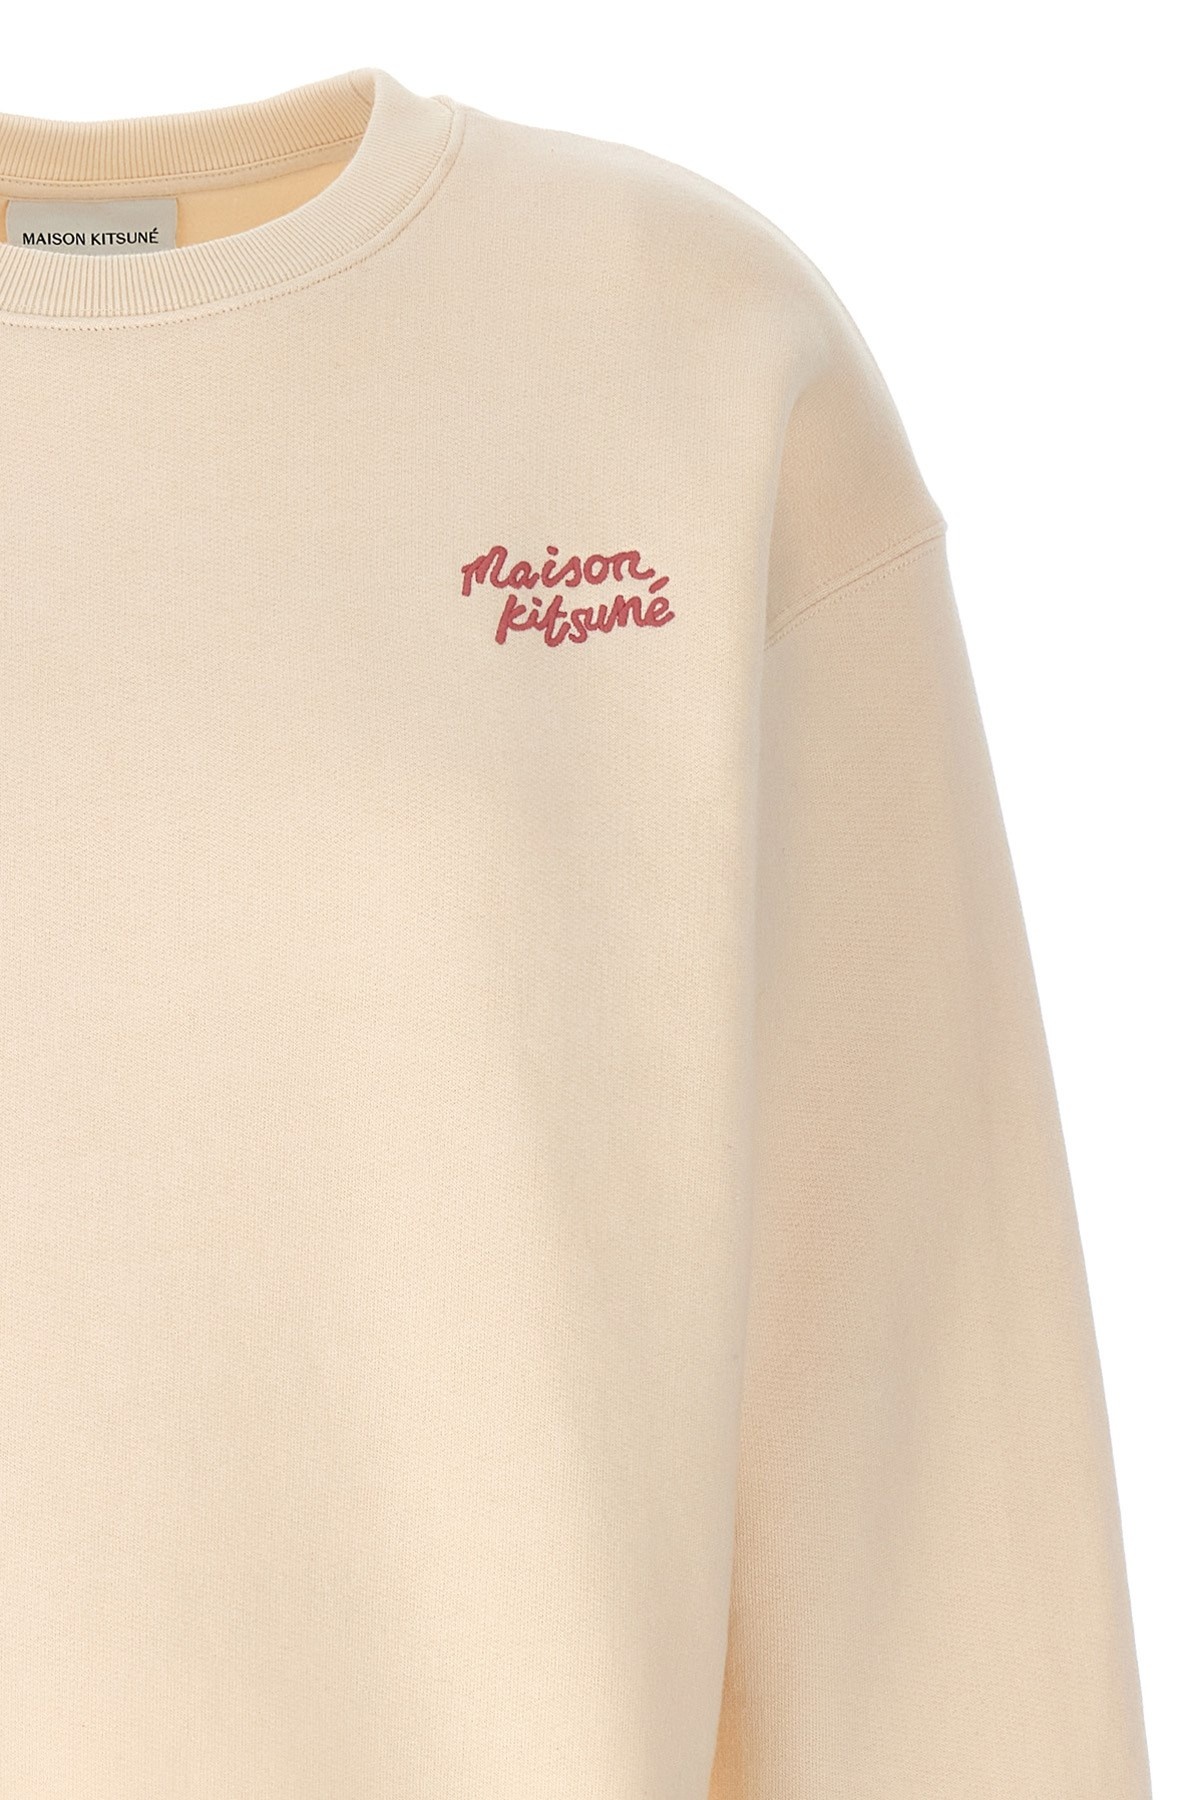 'Maison Kitsuné Handwriting' sweatshirt - 3